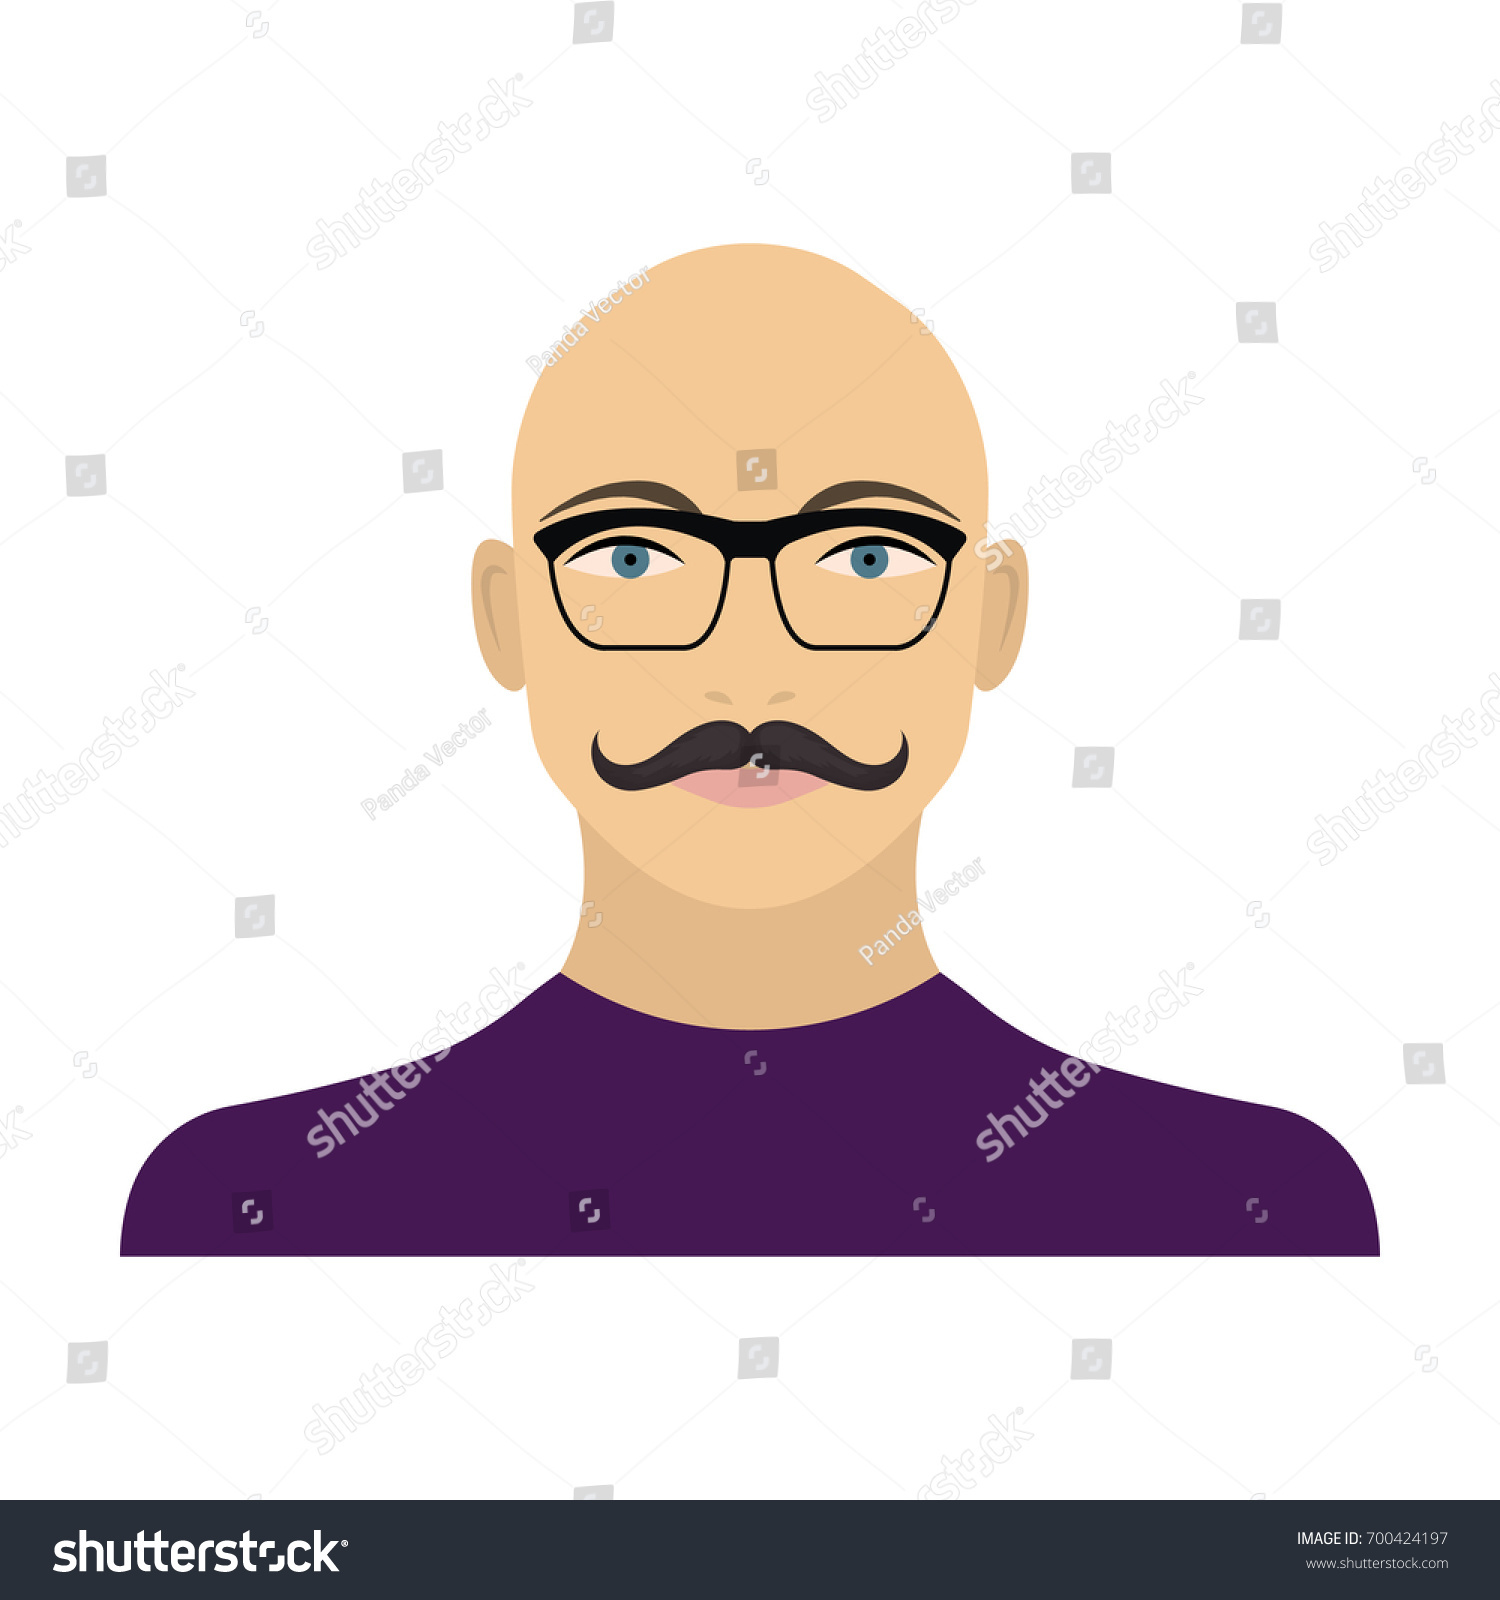 Bald Cartoon Characters With Glasses | Les Baux-de-Provence